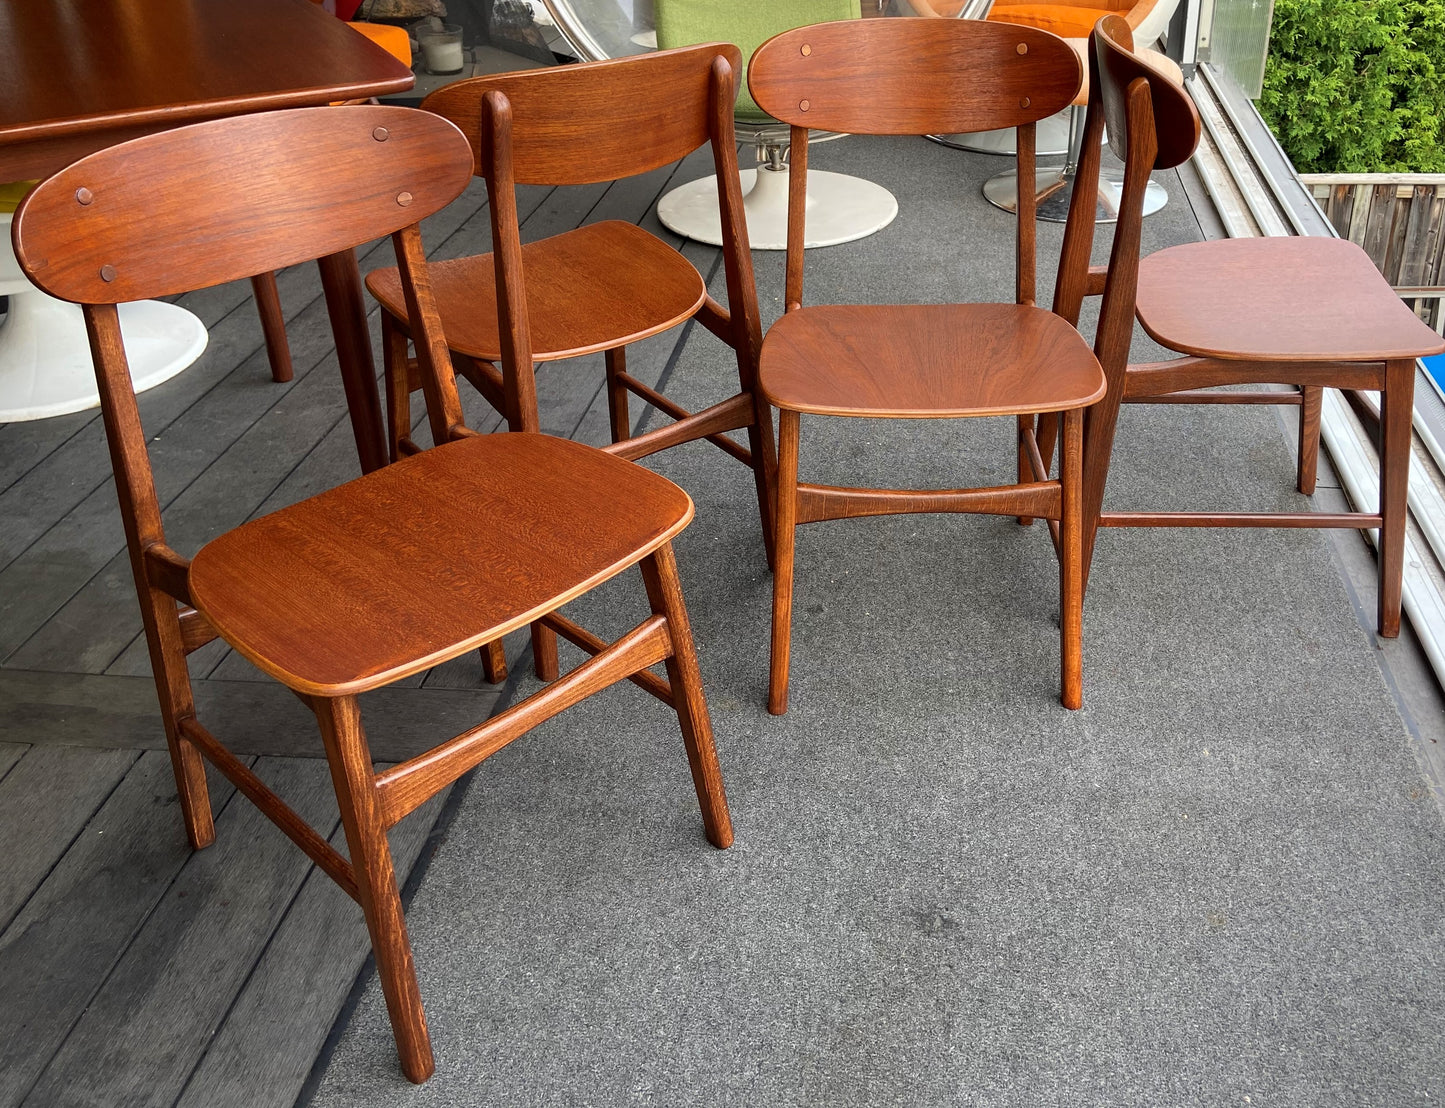 4 REFINISHED Danish Mid Century Modern Teak Chairs by Borge Mogensen